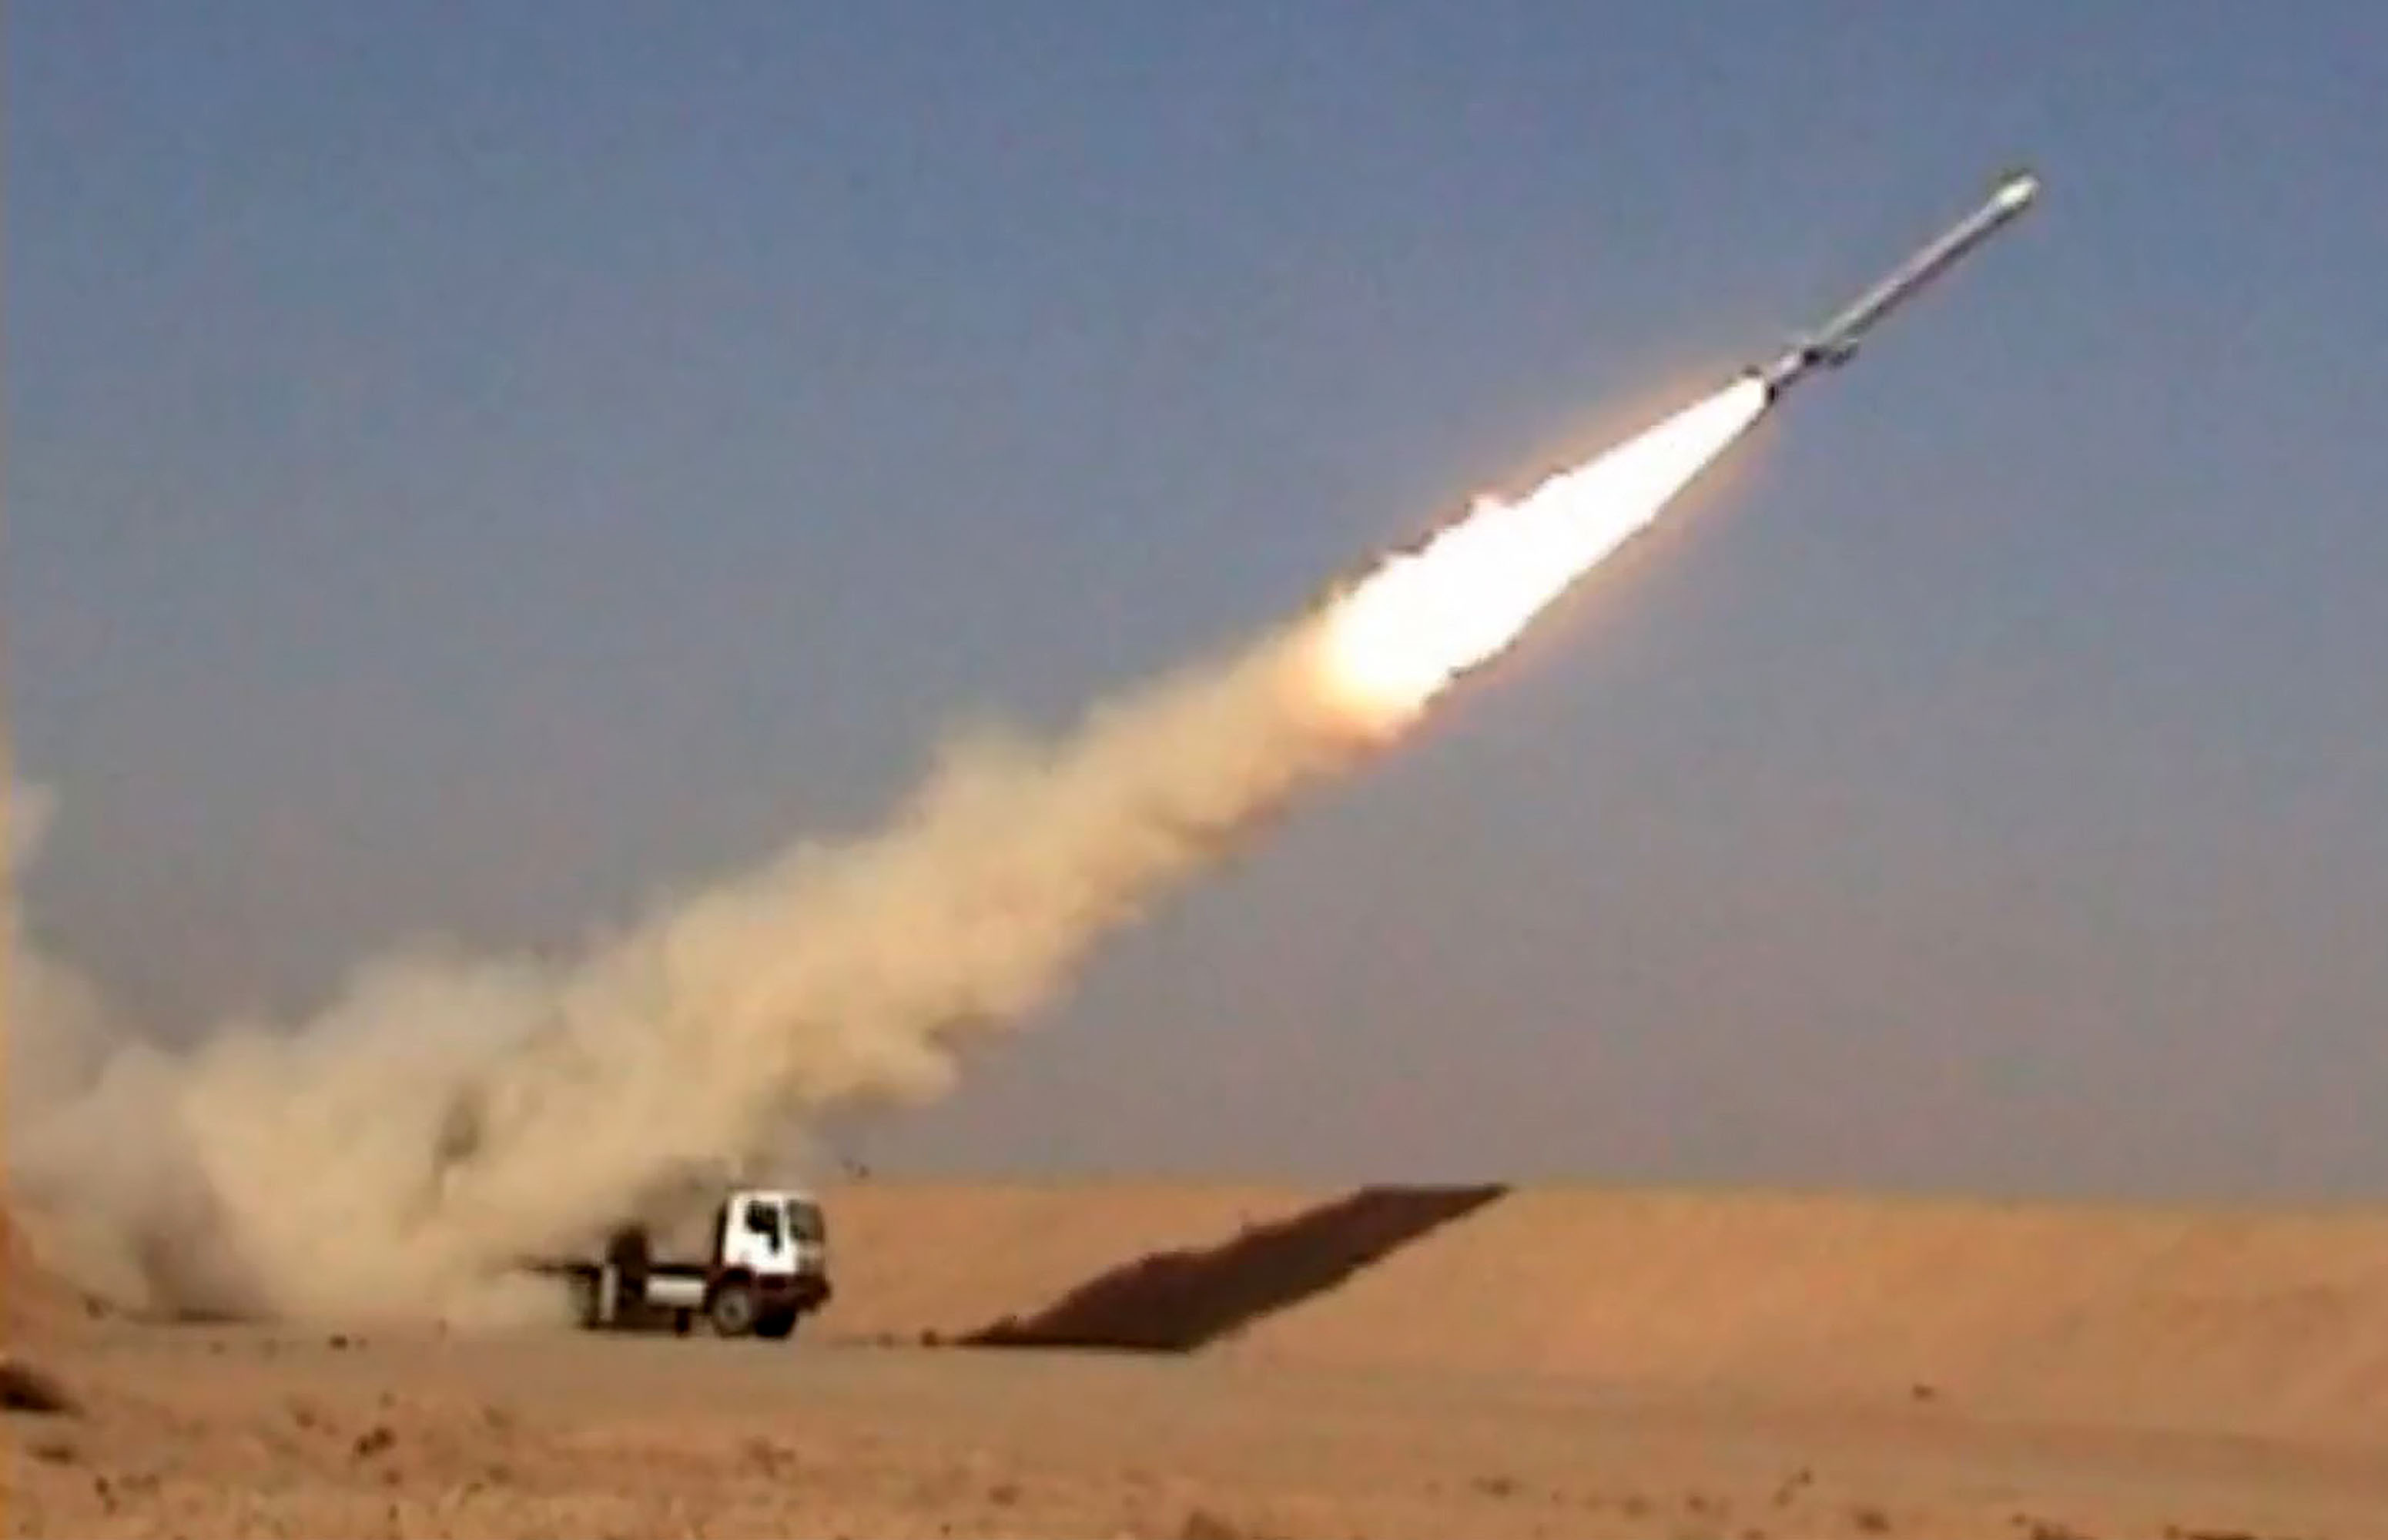 Iran Releases Video of Long-Range Missile Test, Tasnim Reports - Bloomberg